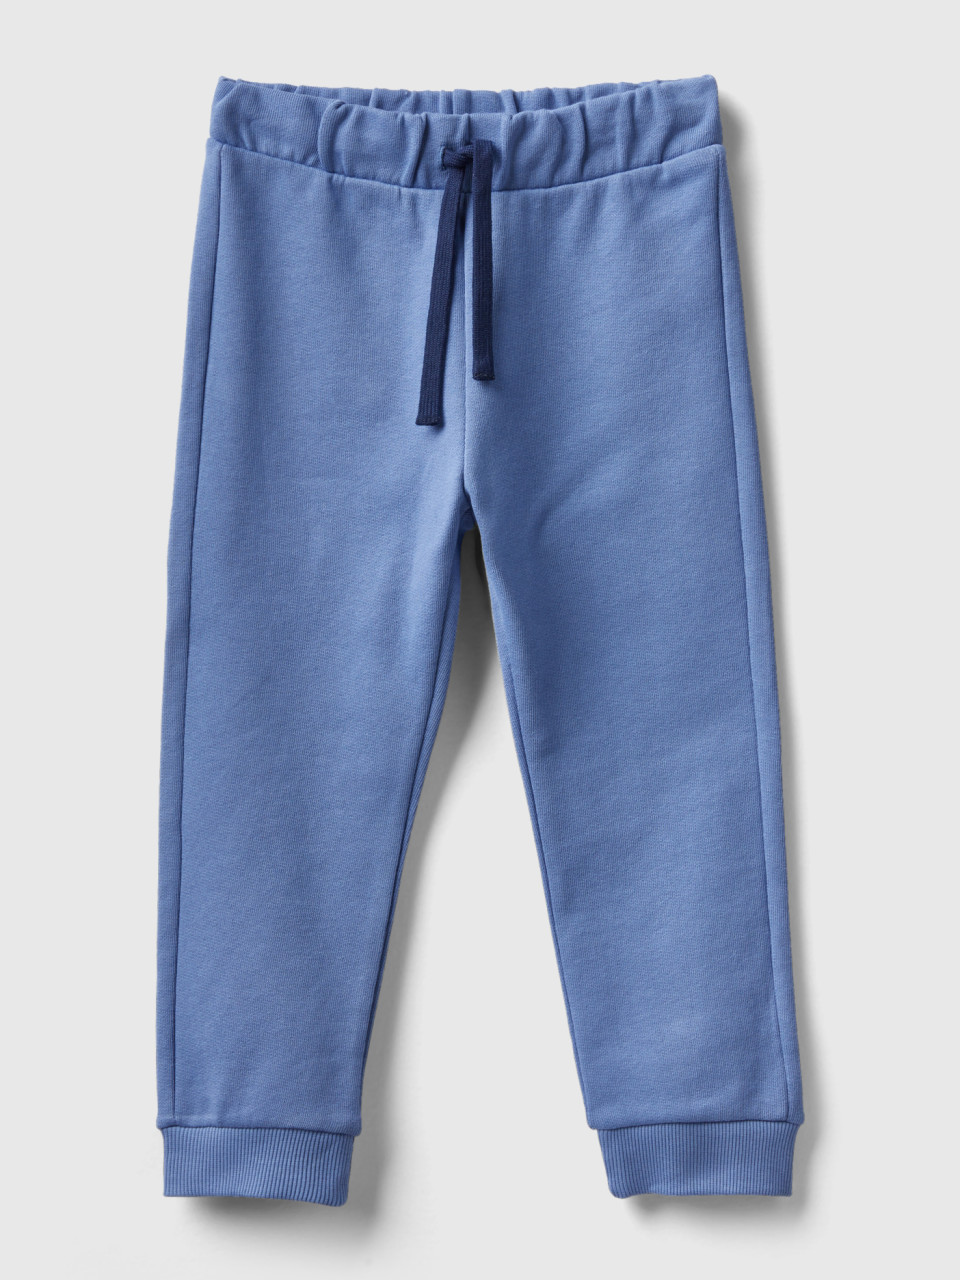 Benetton, Sweatpants With Pocket, Light Blue, Kids